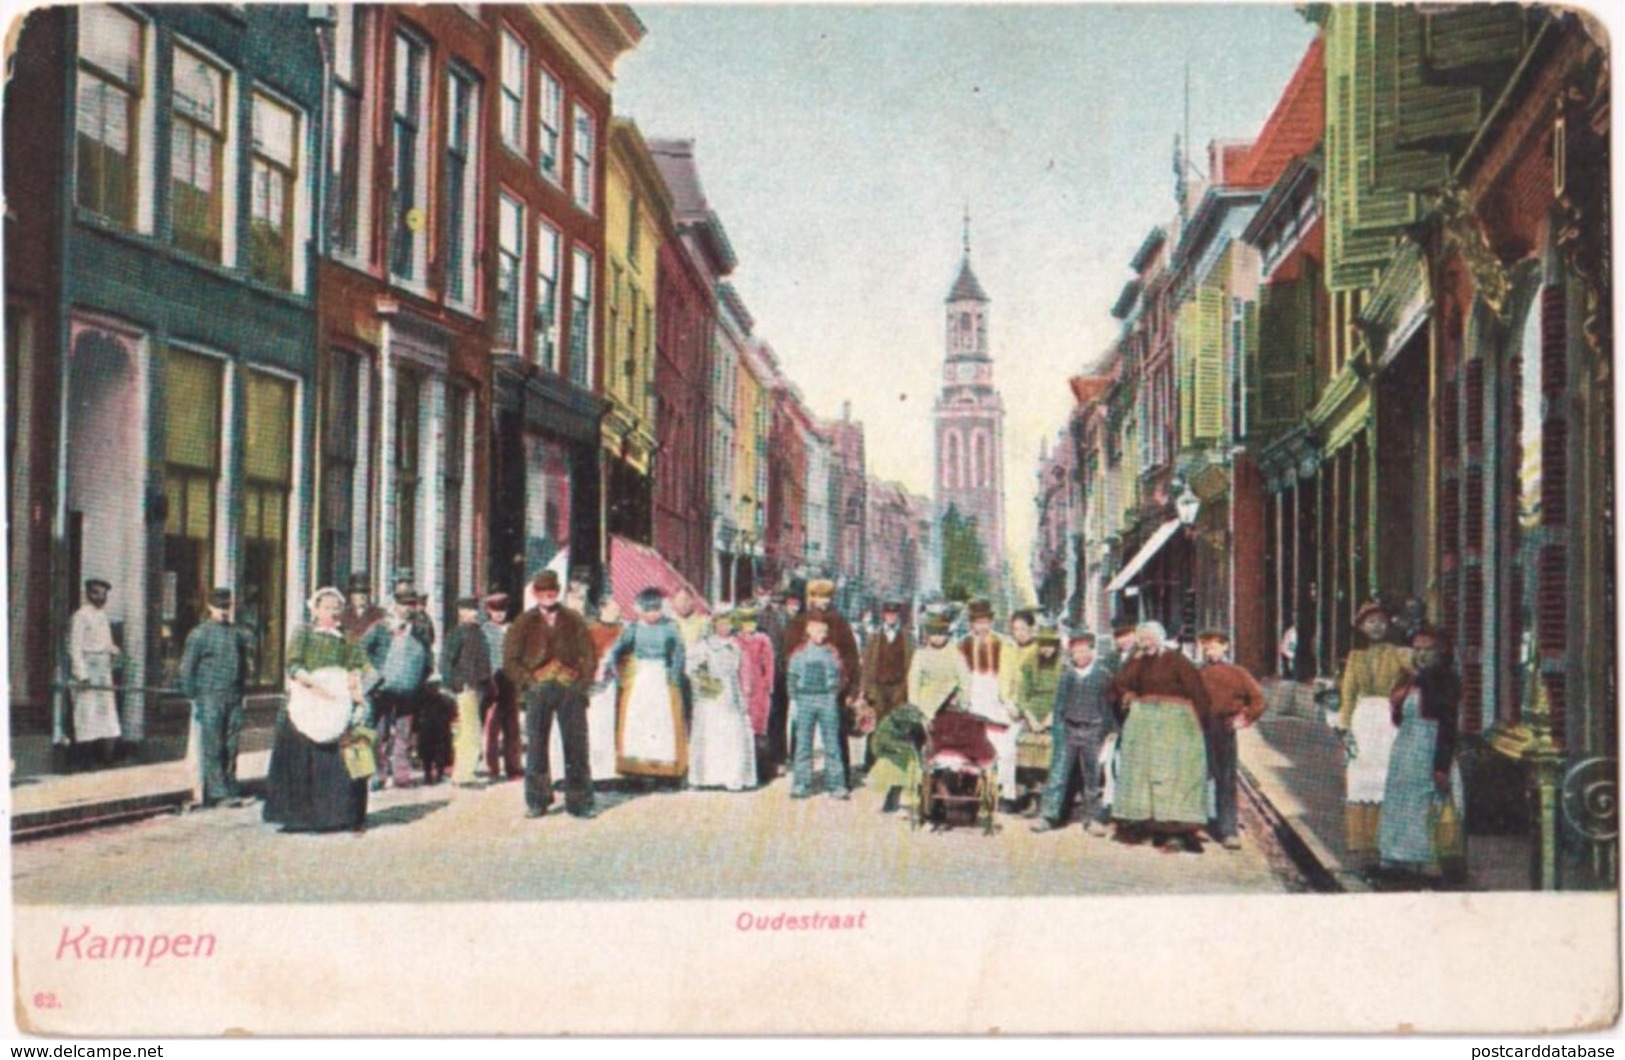 Kampen - Oudestraat - Kampen